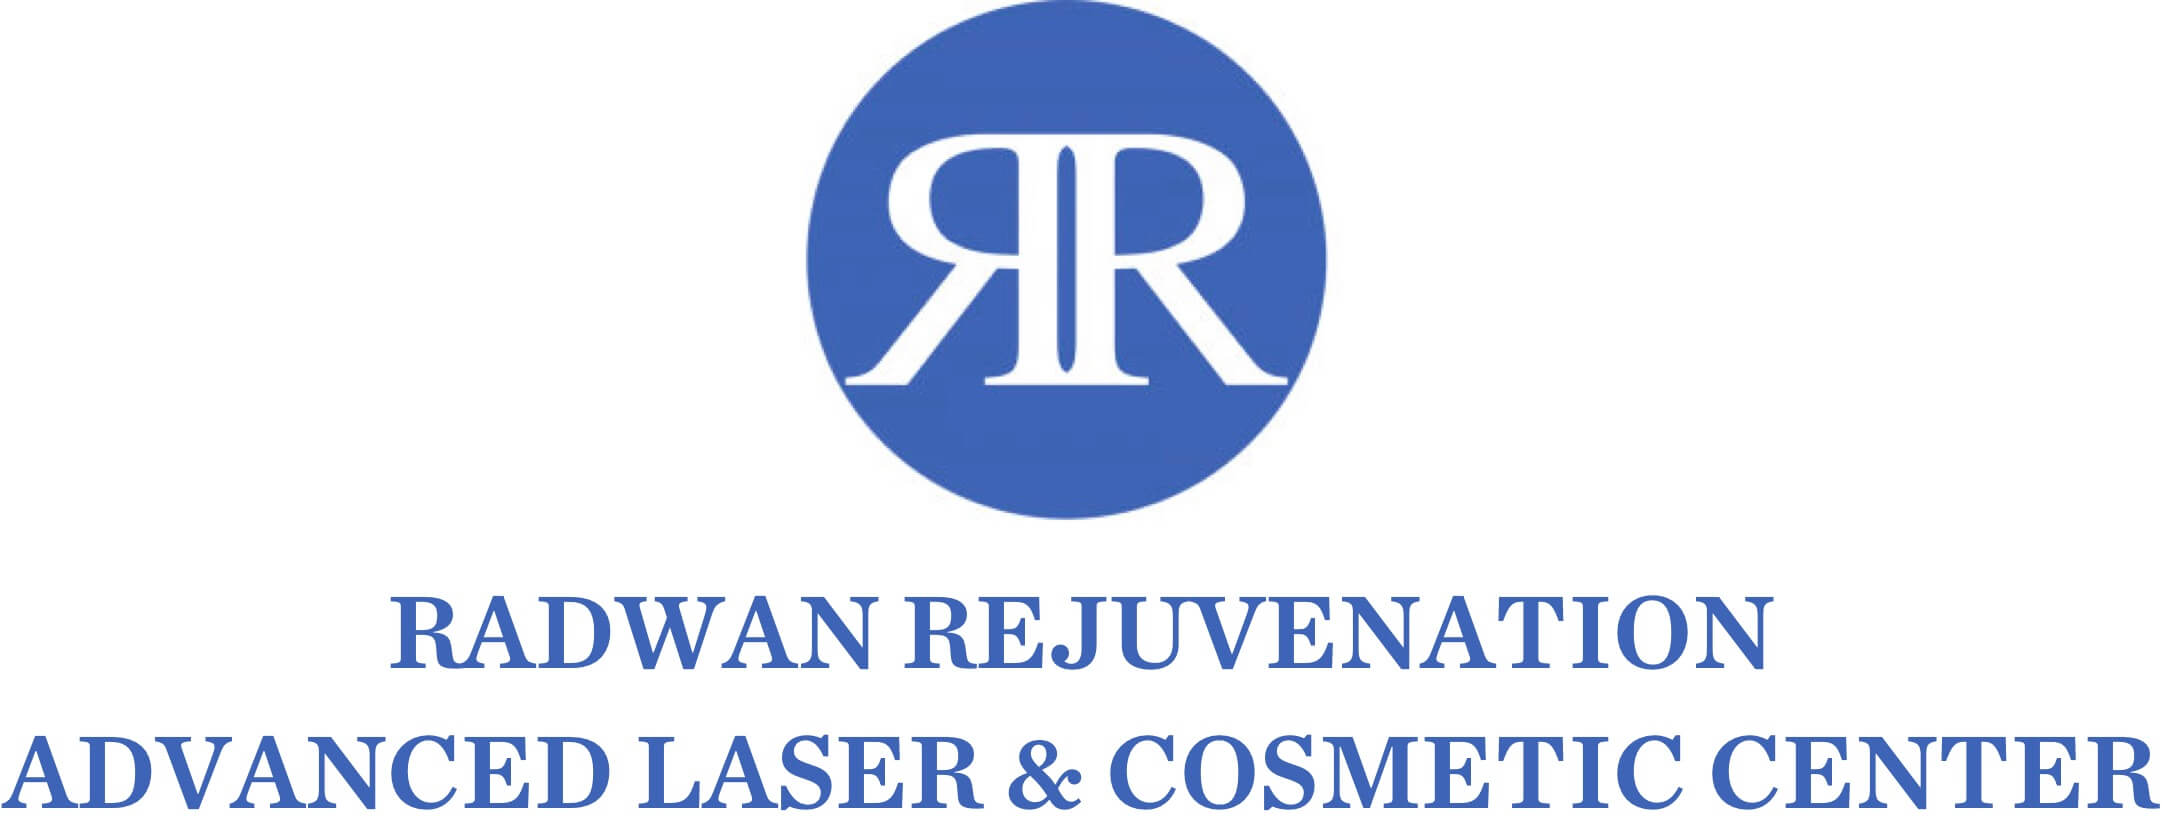 Radwan Medical Clinic & Rejuvenation Advance Laser Center 